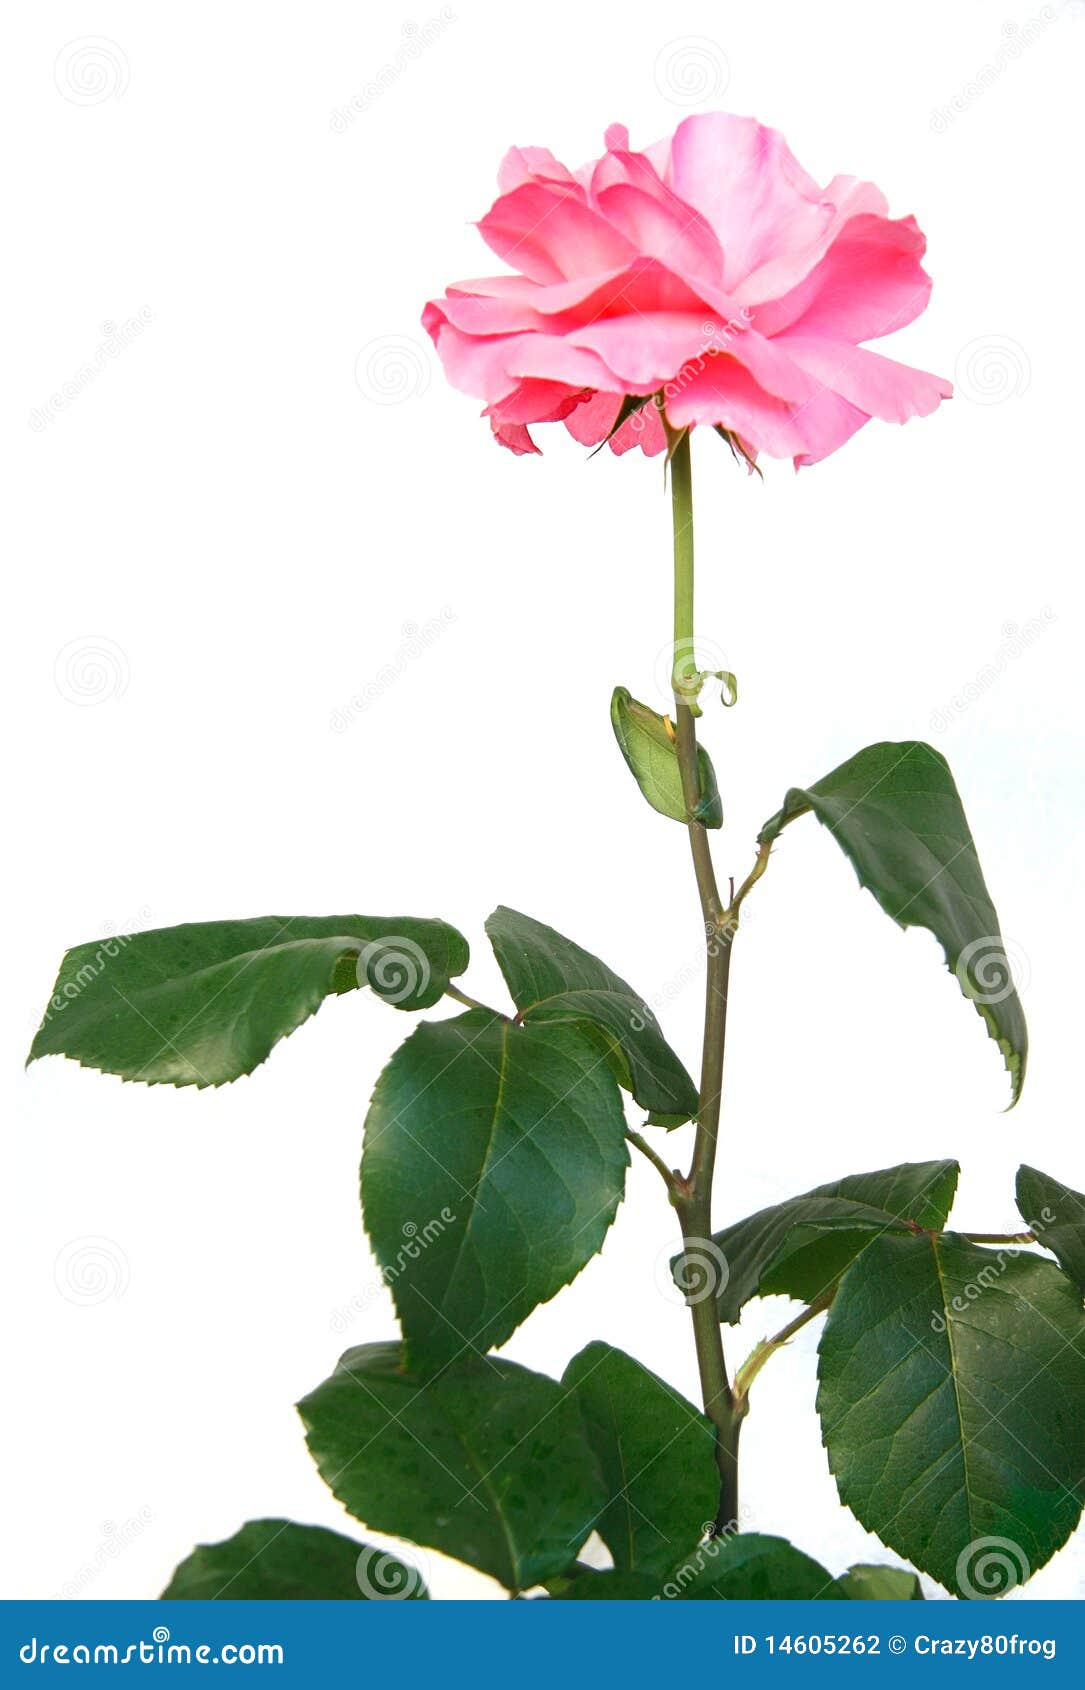 Beautiful pink rose stock photo. Image of natural, petal - 14605262